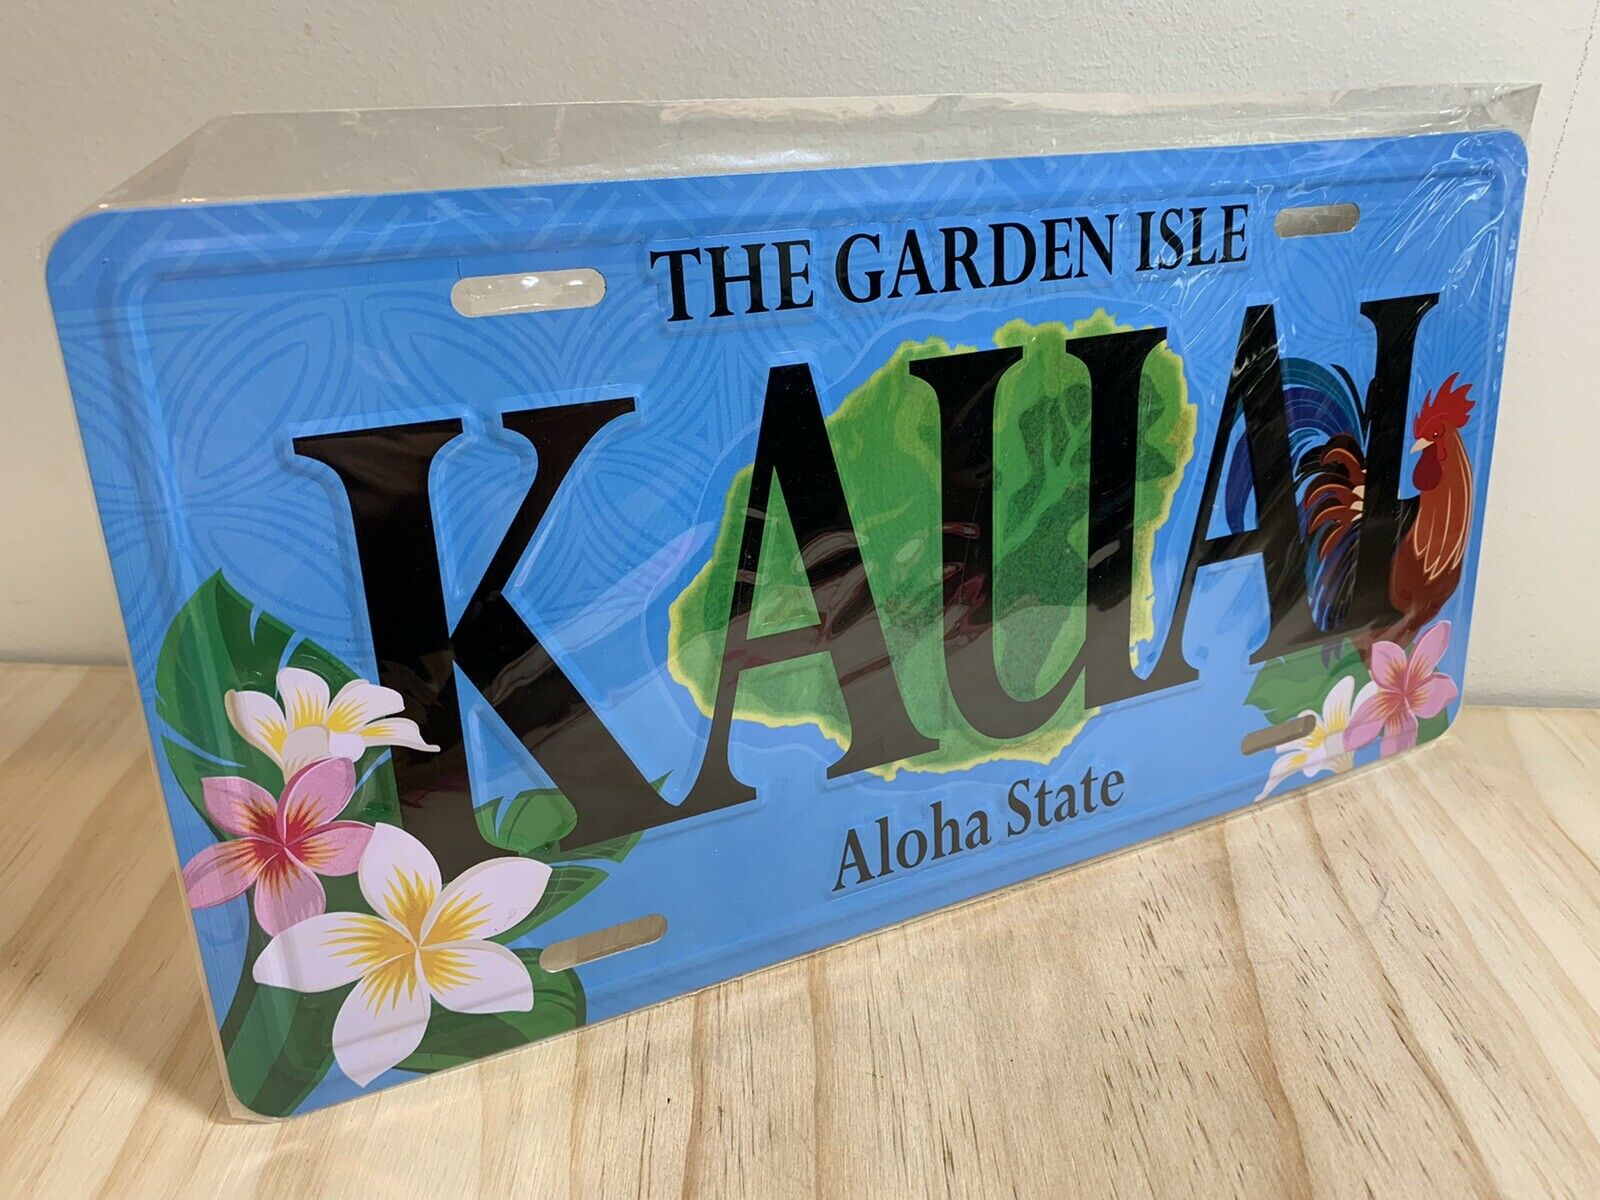 Kauai The Garden Isle Aloha State Novelty License Plate Hawaii Island Decor New